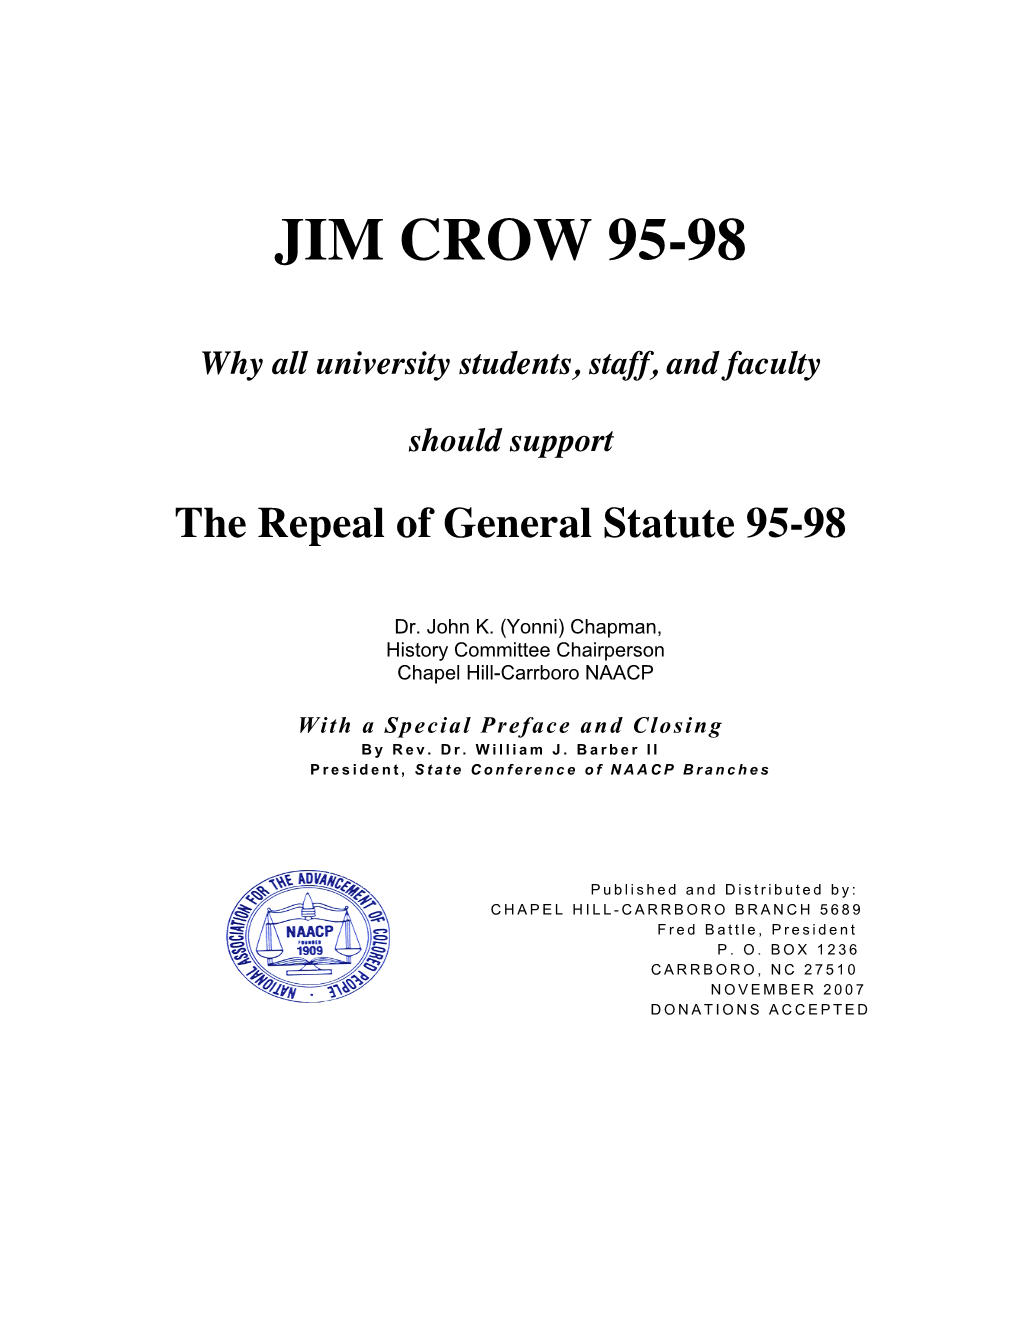 Jim Crow 95-98